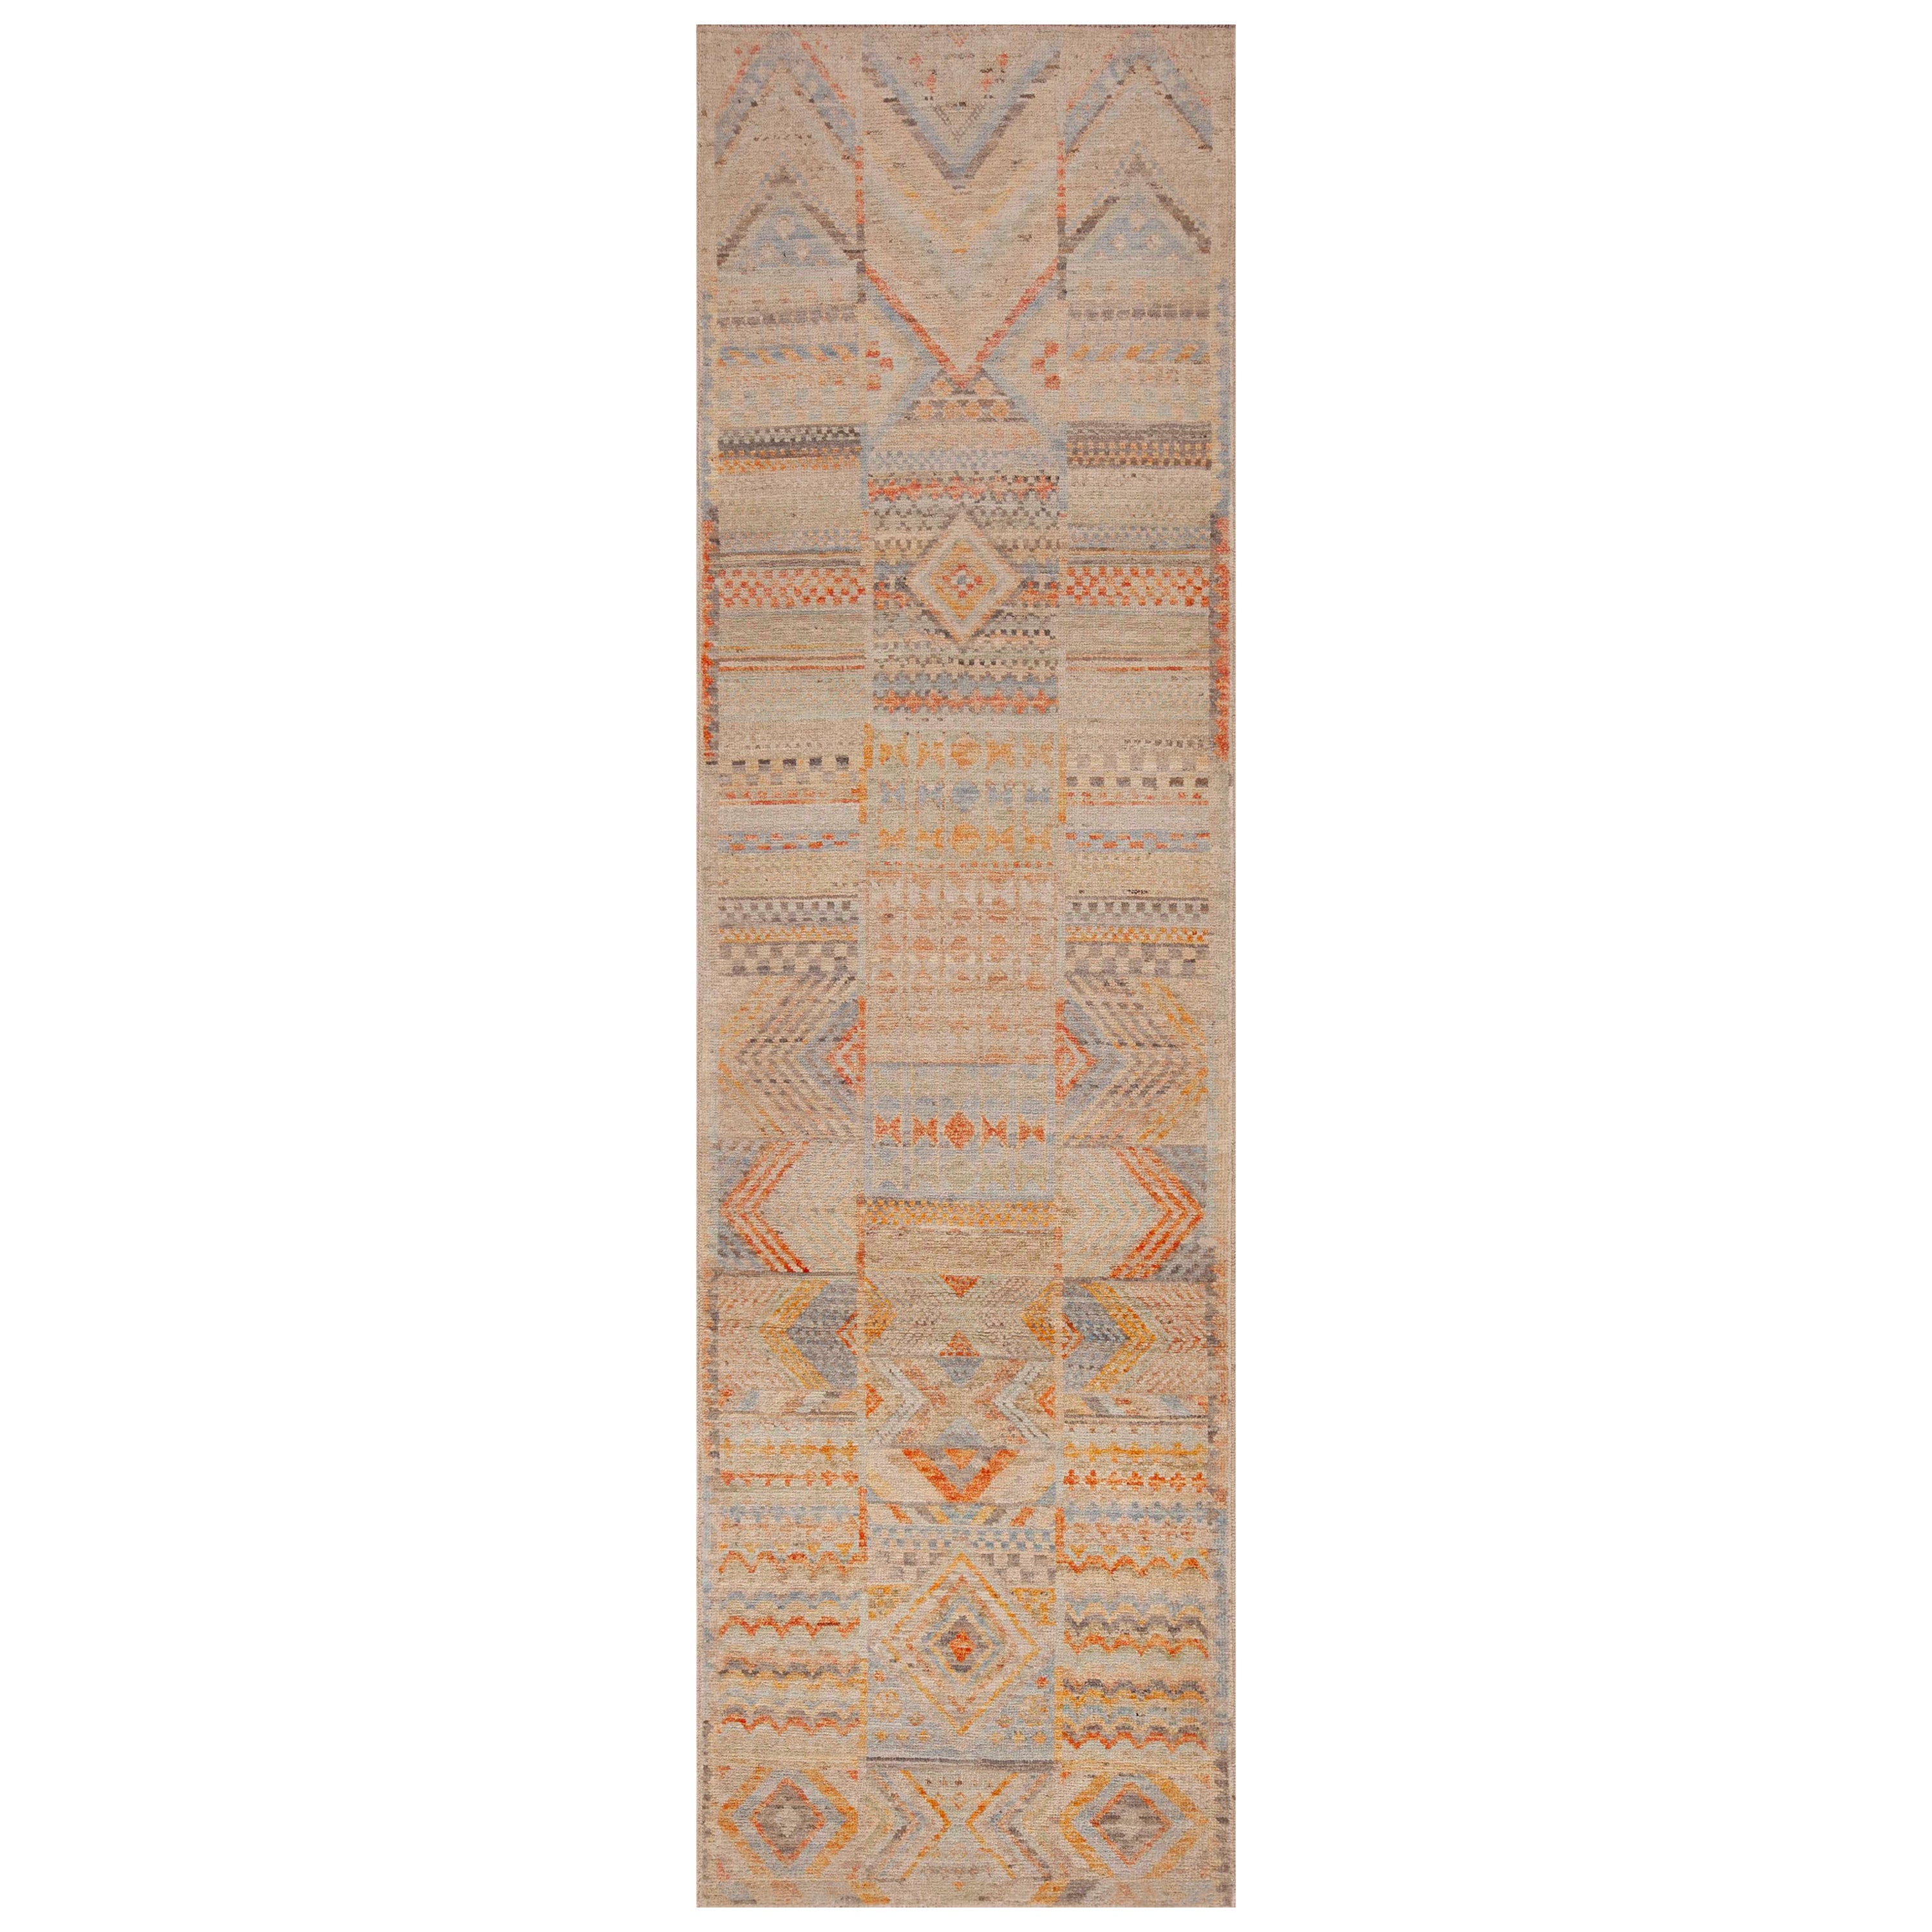 Nazmiyal CollectioN Tribal Geometric Modern Hallway Runner Rug 2'9" x 9'7"